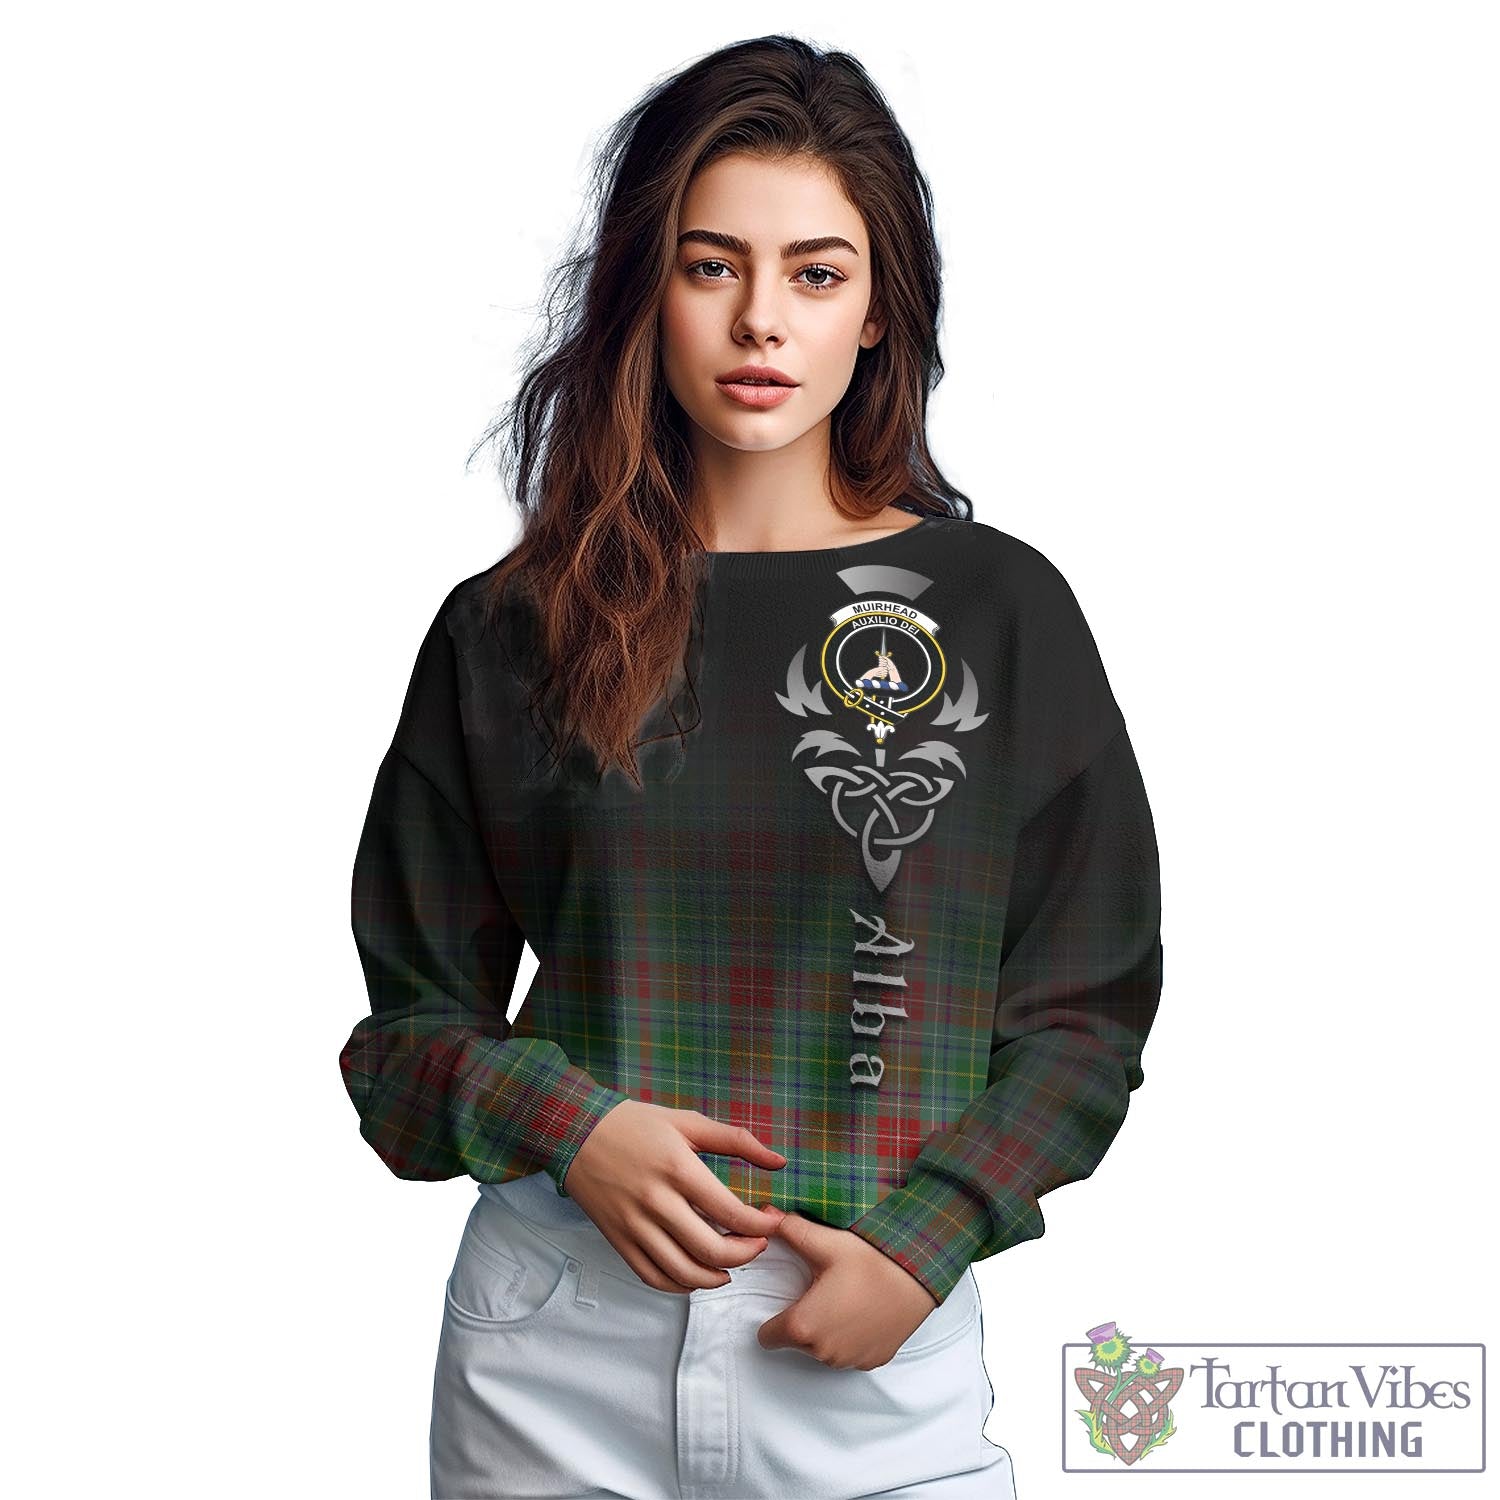 Tartan Vibes Clothing Muirhead Tartan Sweatshirt Featuring Alba Gu Brath Family Crest Celtic Inspired